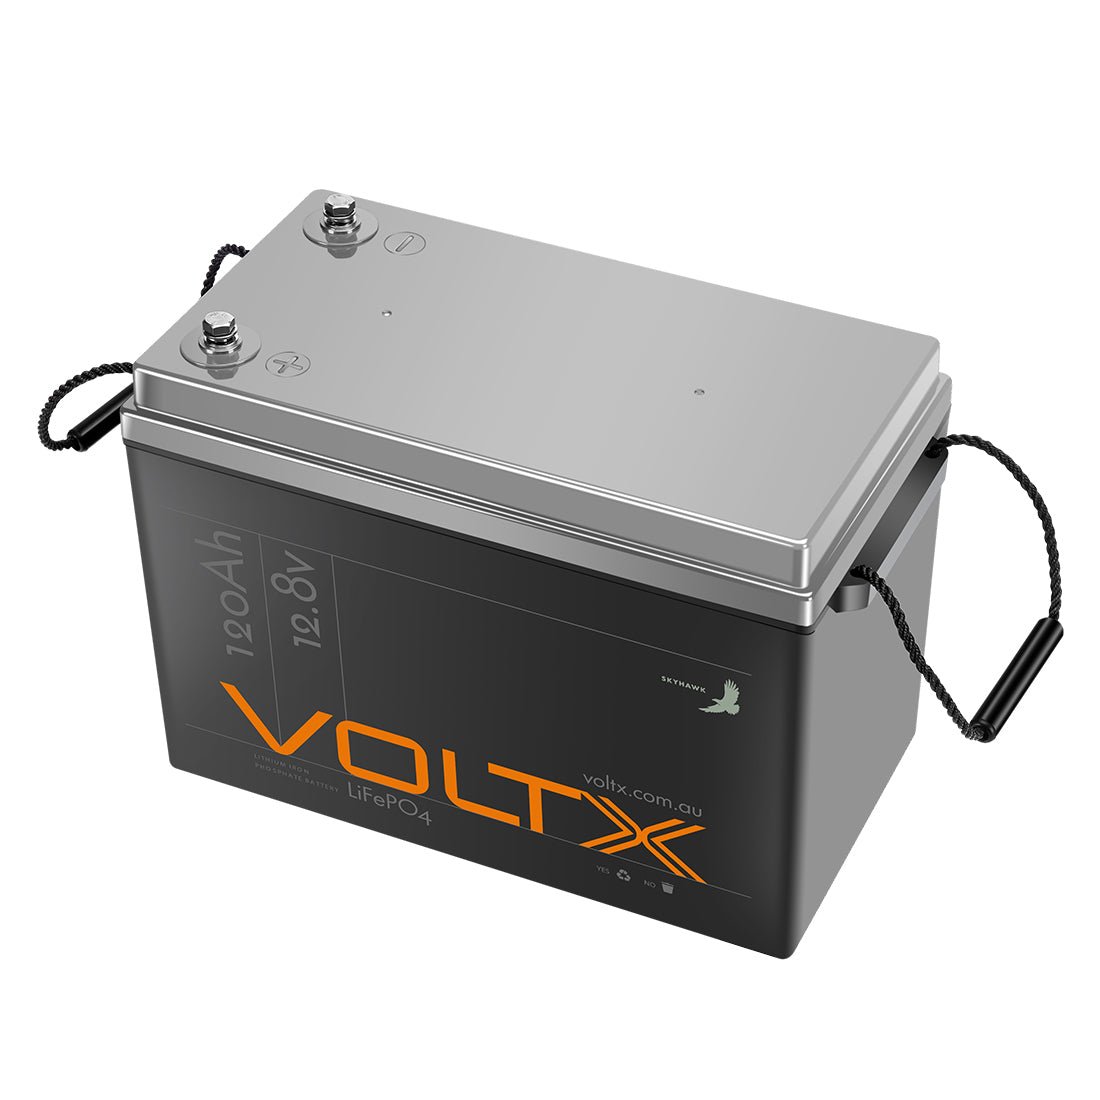 VoltX 12V Lithium Battery 120Ah - Outdoorium